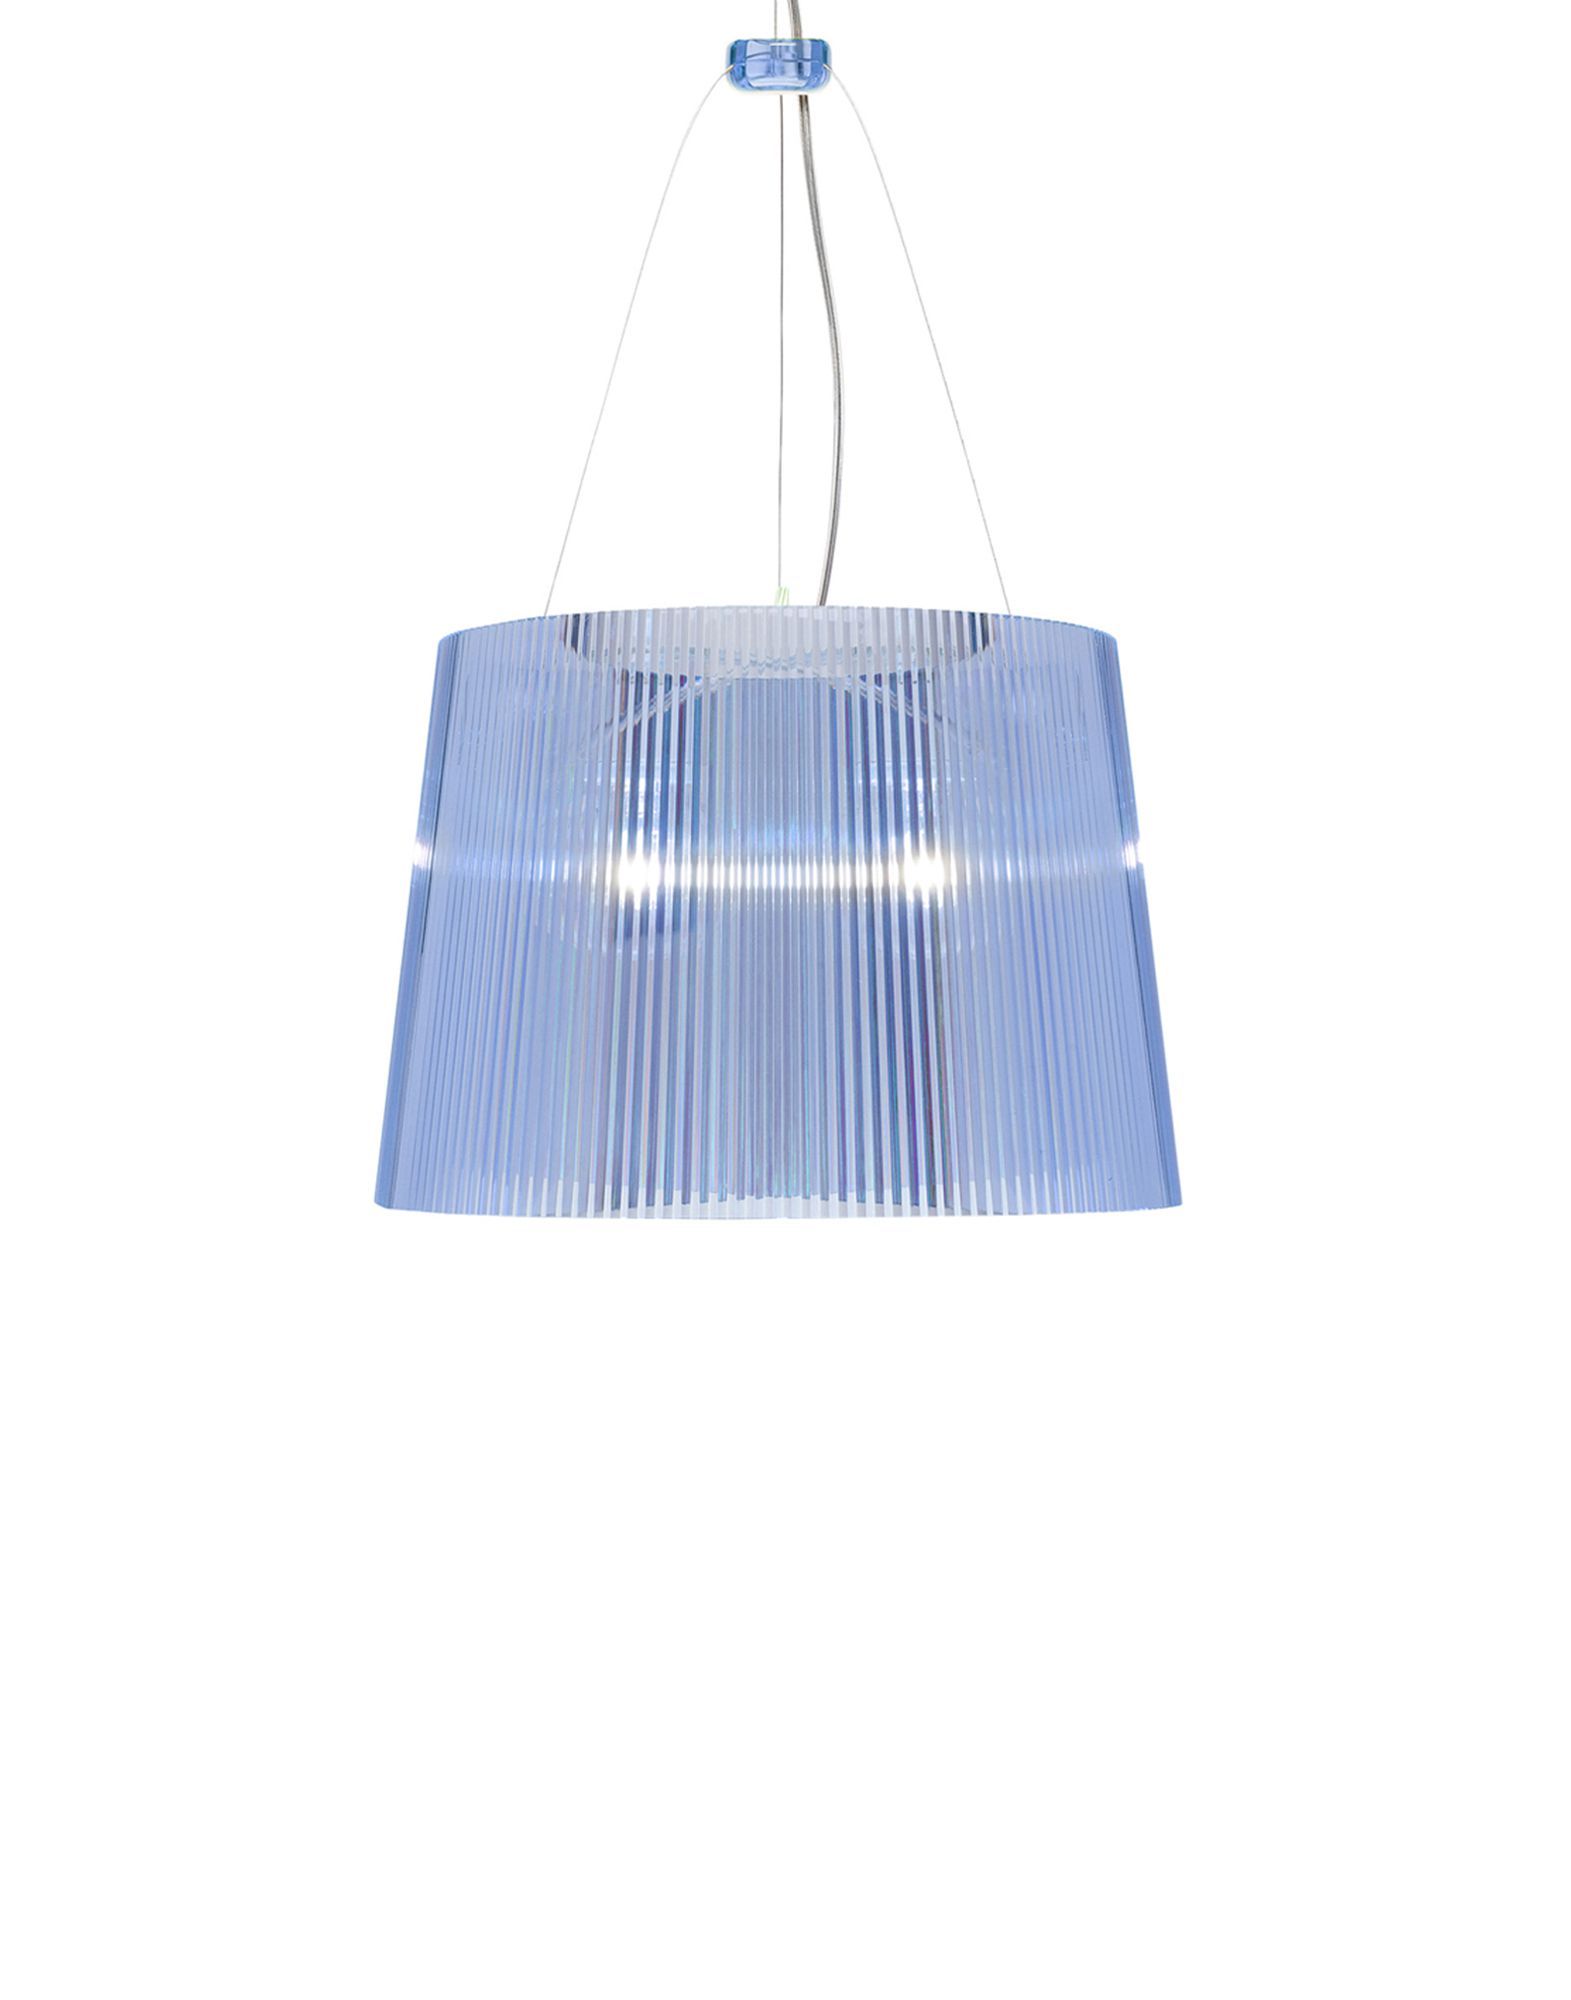 Suspensie Kartell Ge’ design Ferruccio Laviani E27 max 70W h37cm bleu transparent Kartell